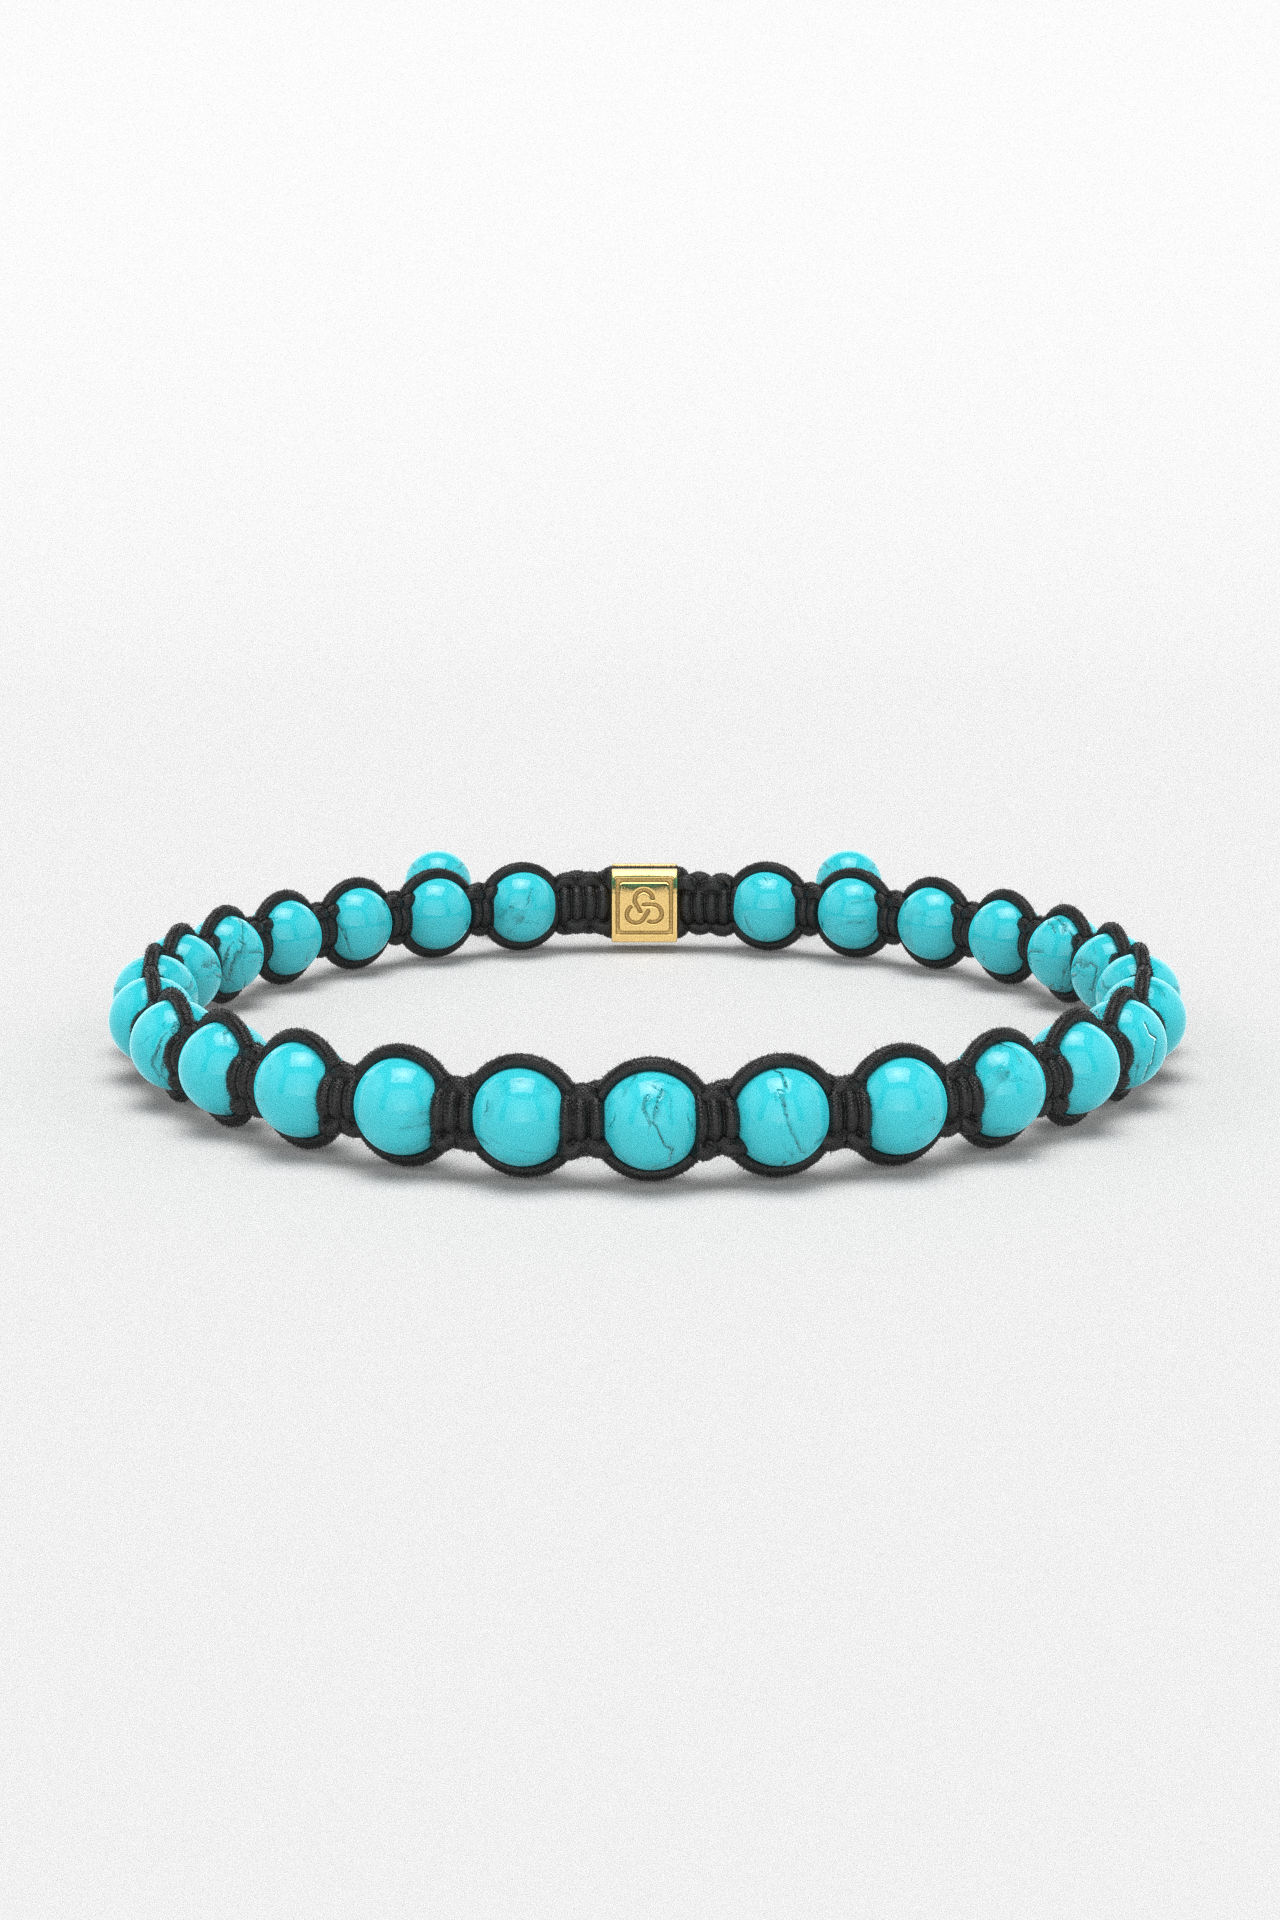 Turquoise Bracelet 6mm | Knot